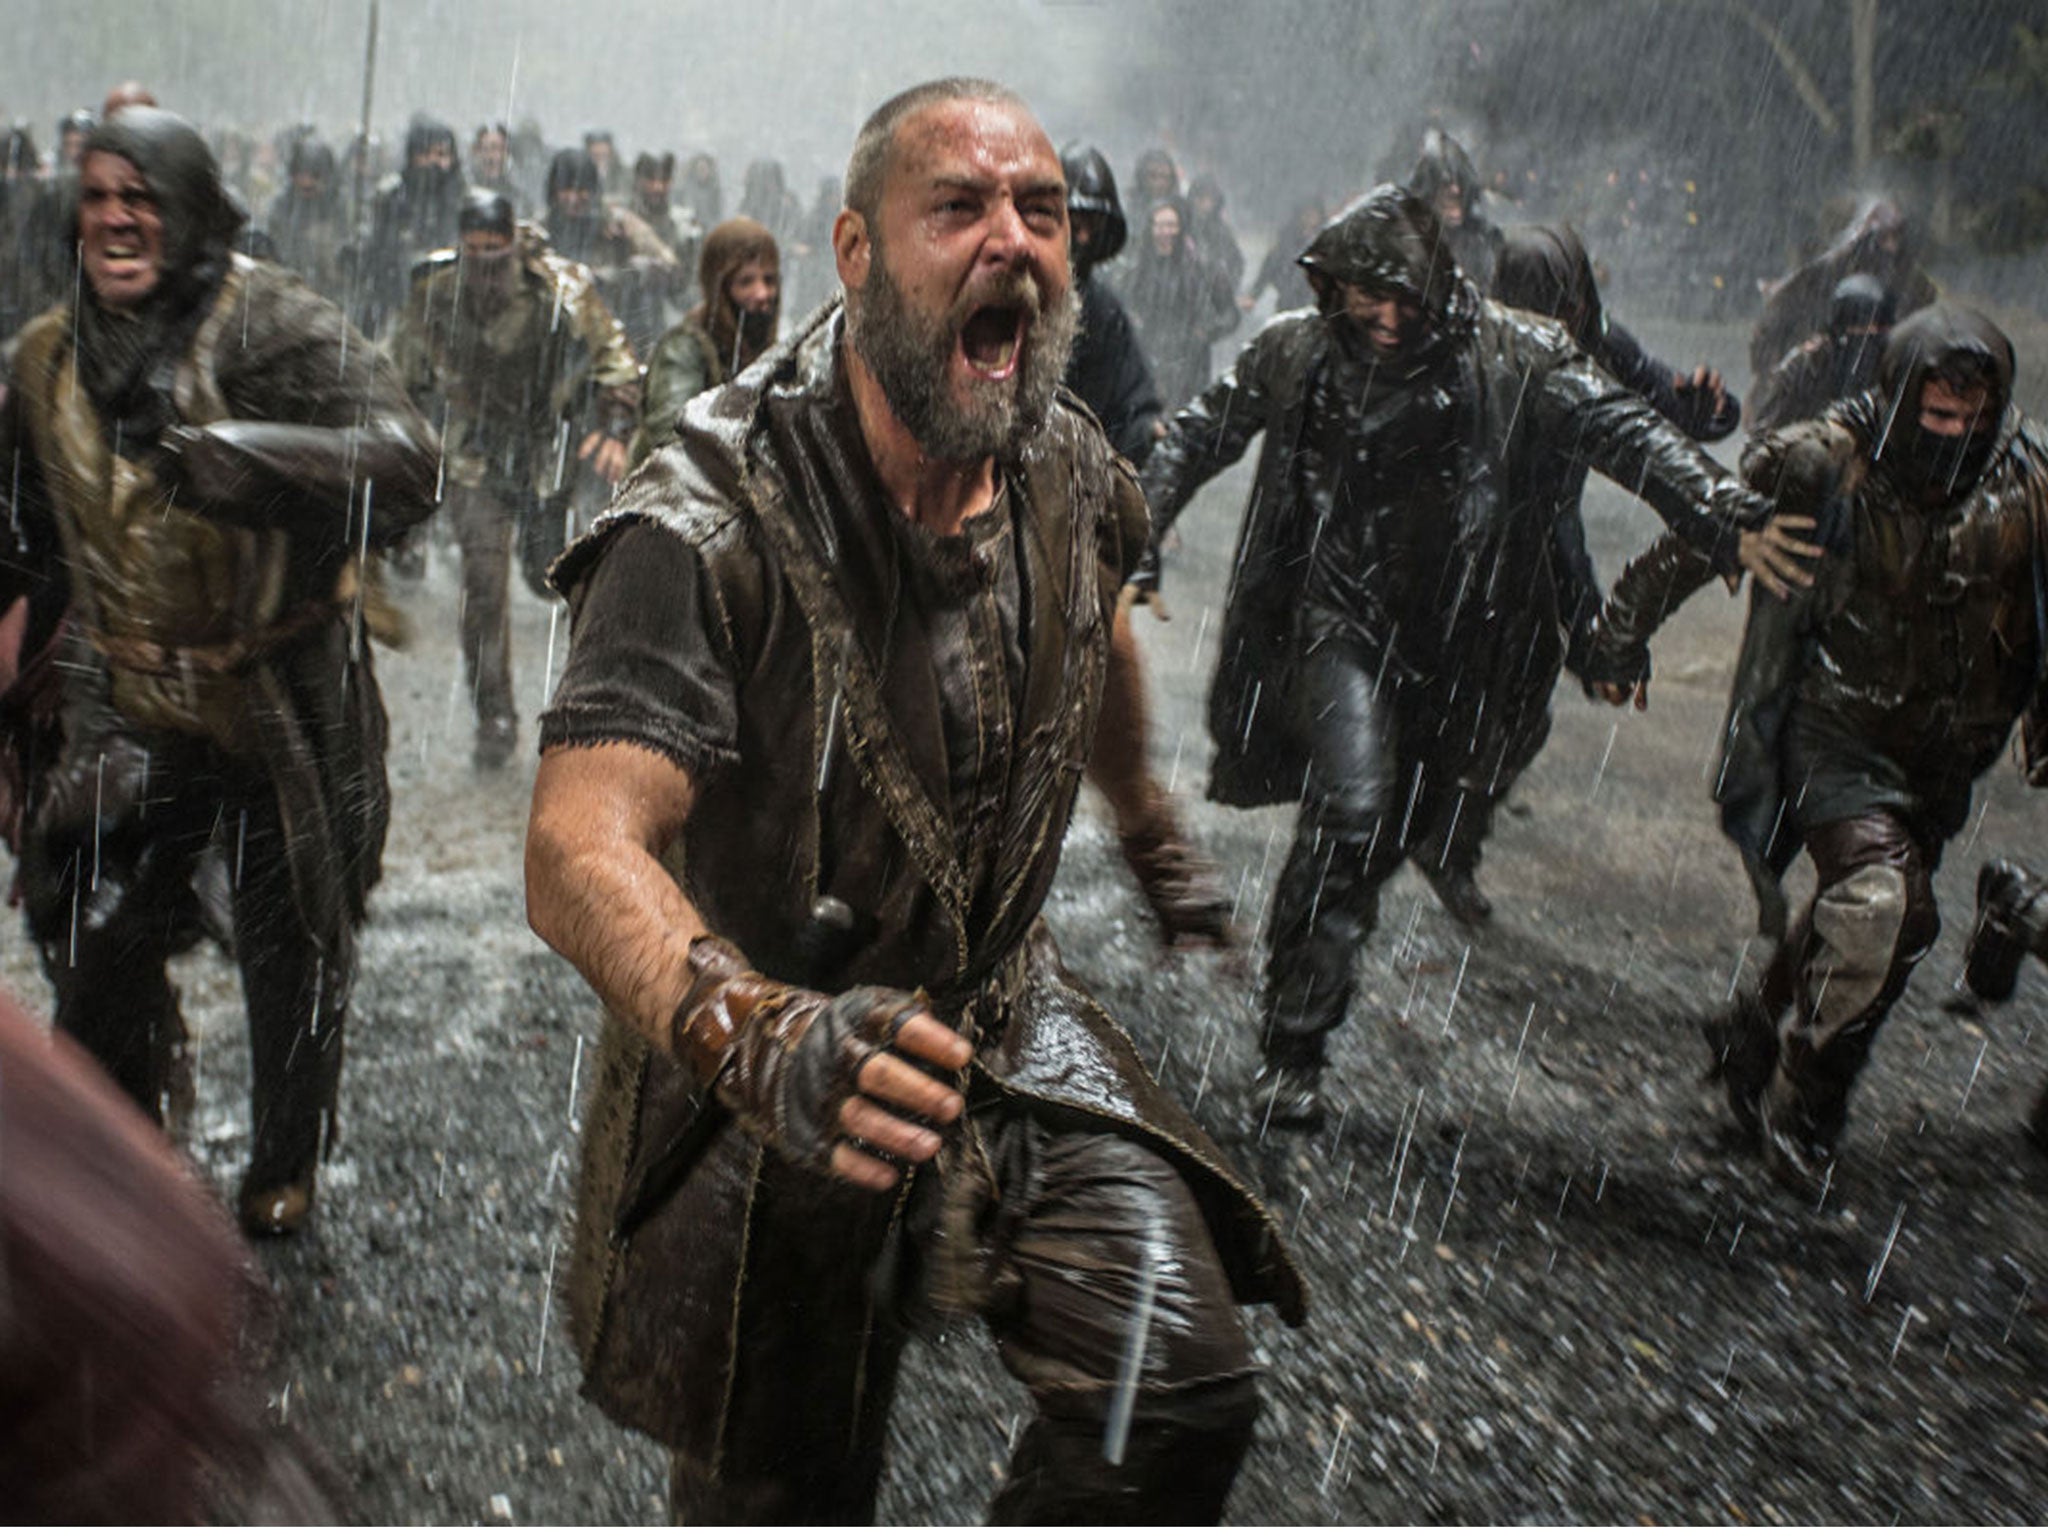 Russell Crowe in a dramatic scene from Darren Aronofsky's Noah